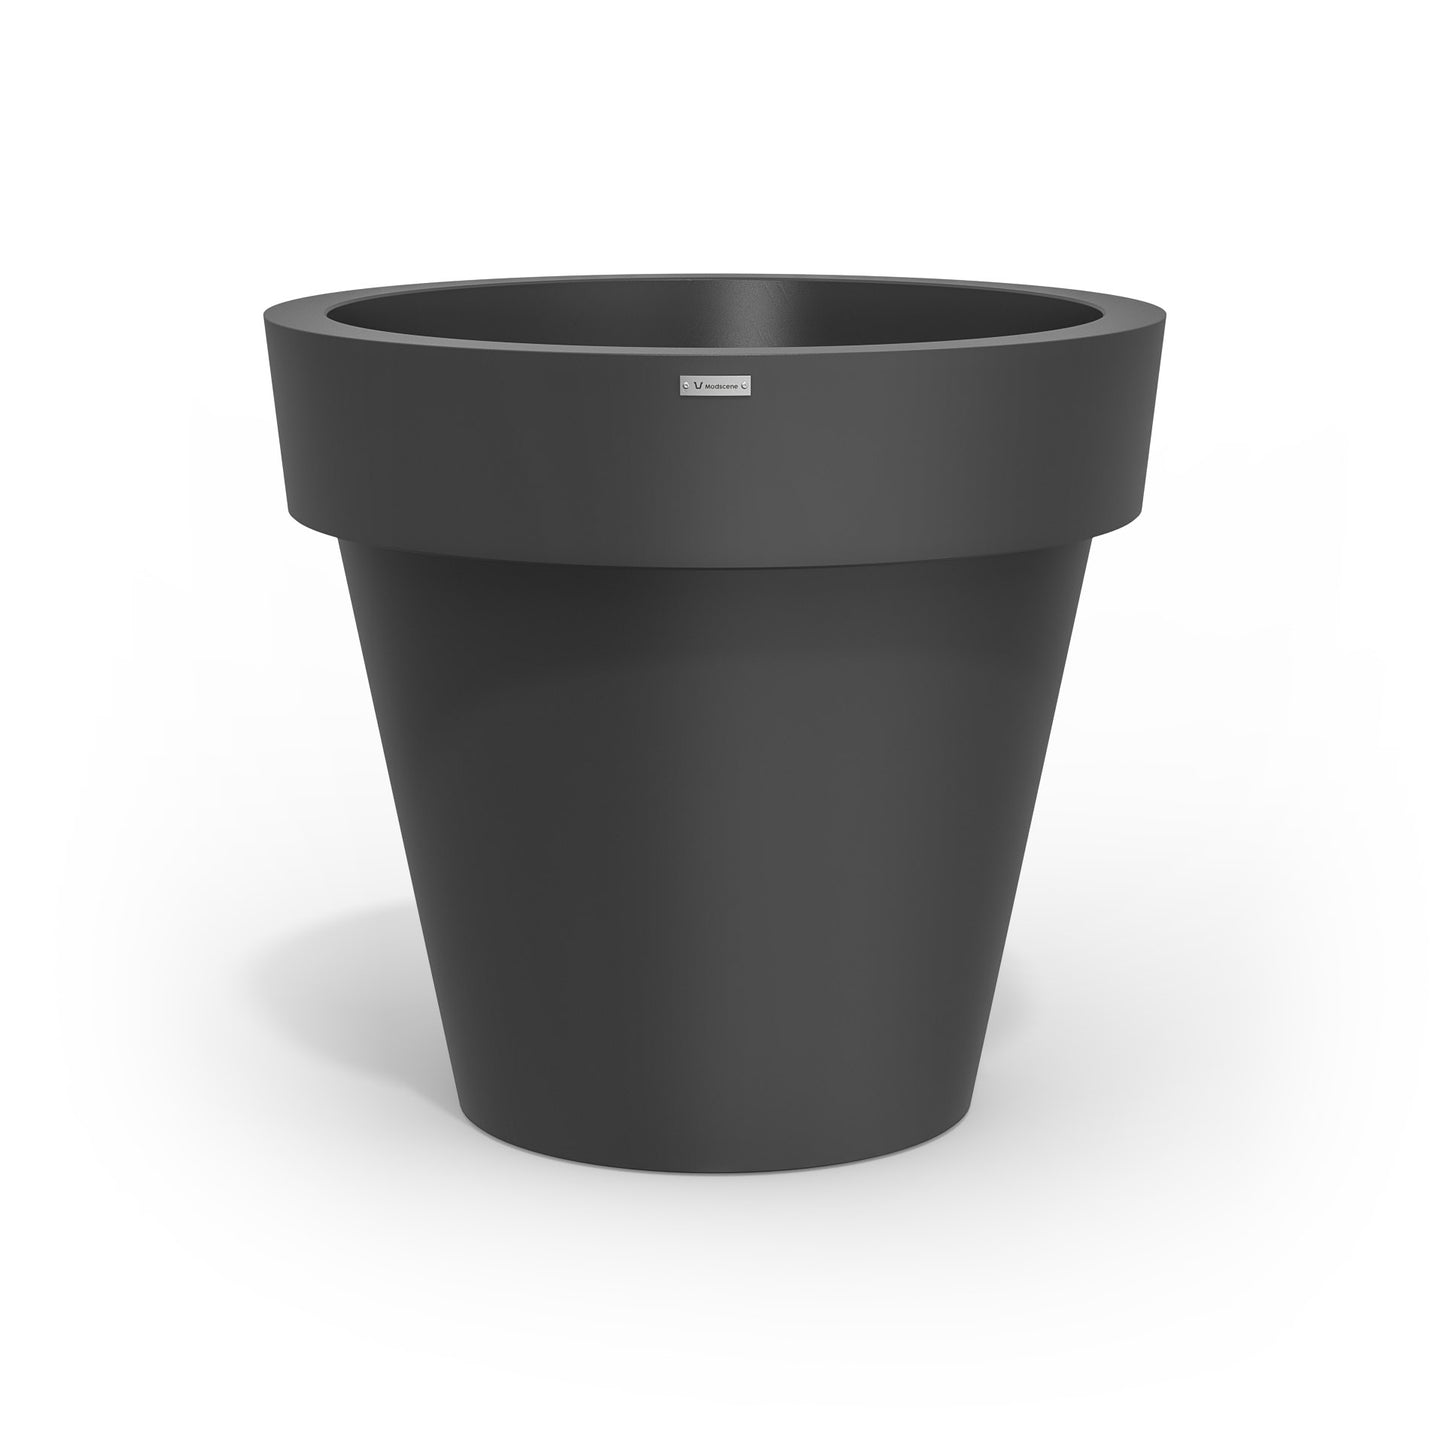 Large Modscene plastic planter pot in a dark grey colour. NZ made.